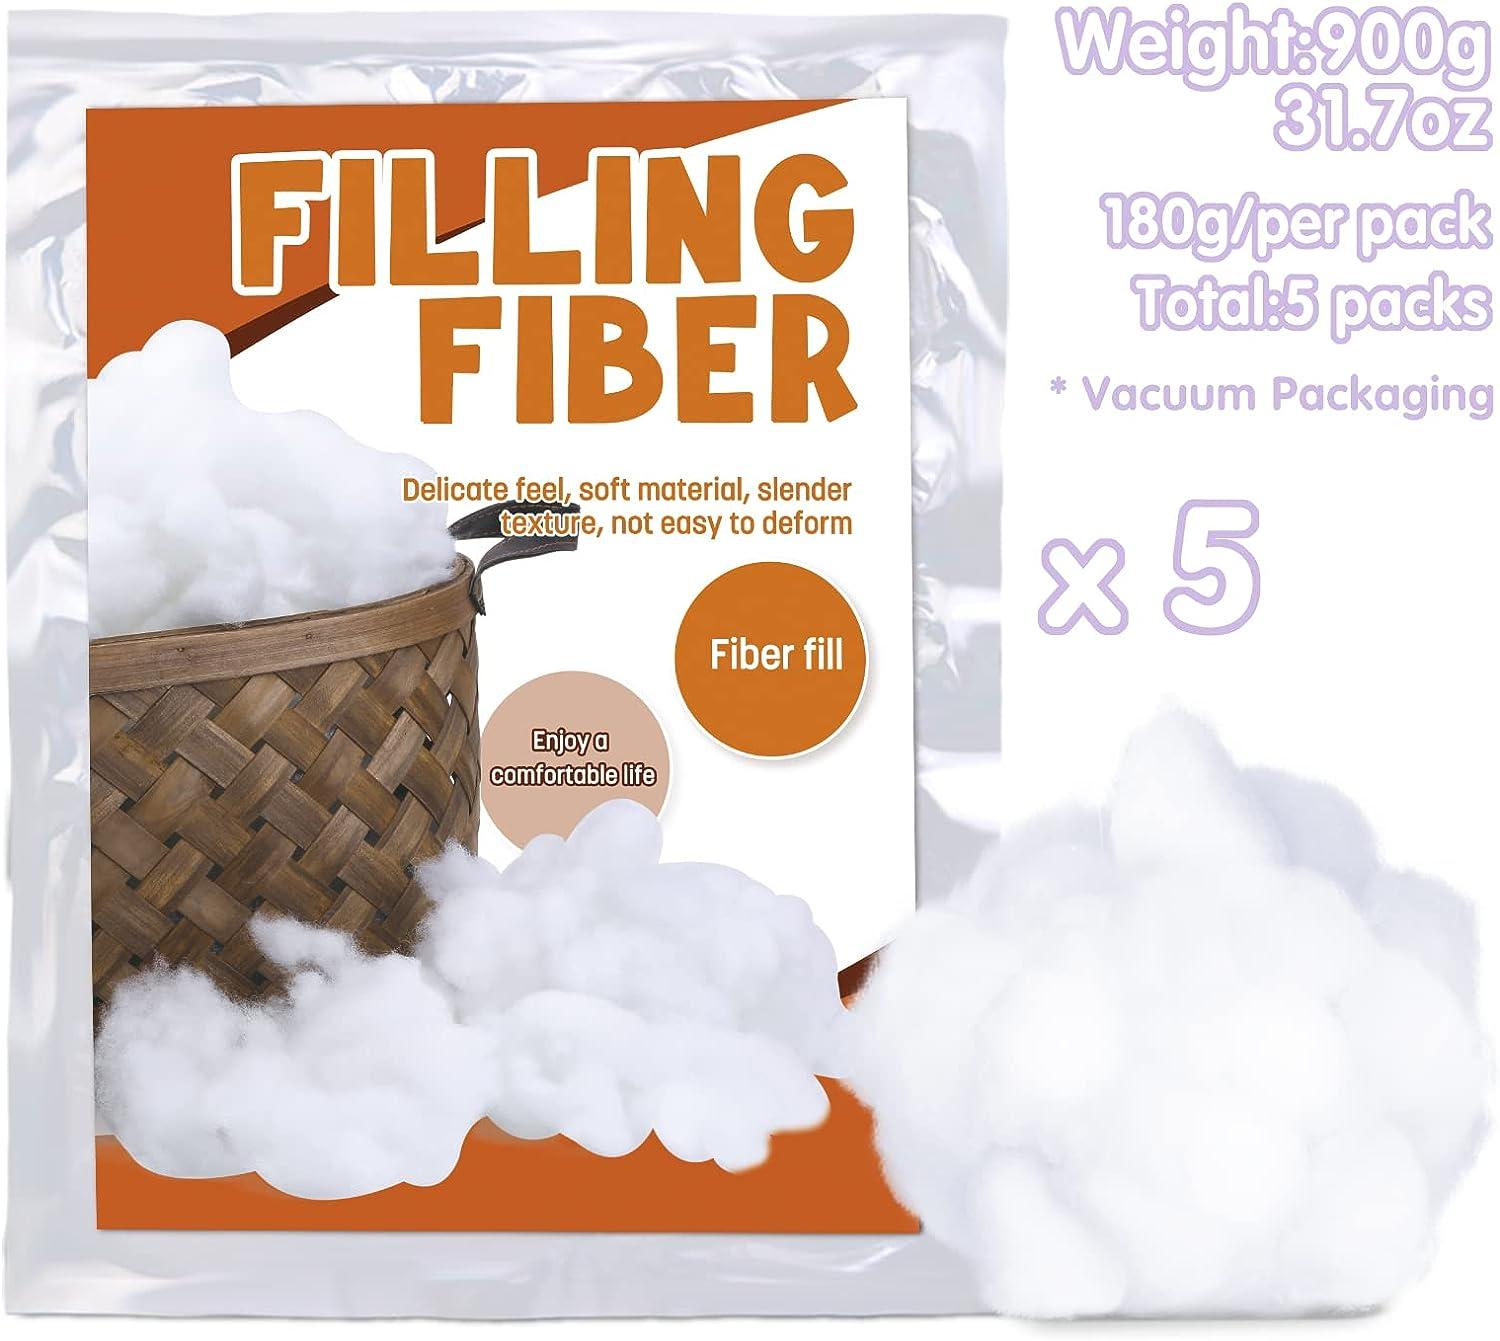 Premium Polyester Fiber Fill, White High Resilience Fill Fiber, Pillow Filling Stuffing, Fluff Stuffing Fill Fiber for Stuffed Animal Crafts, Pillow